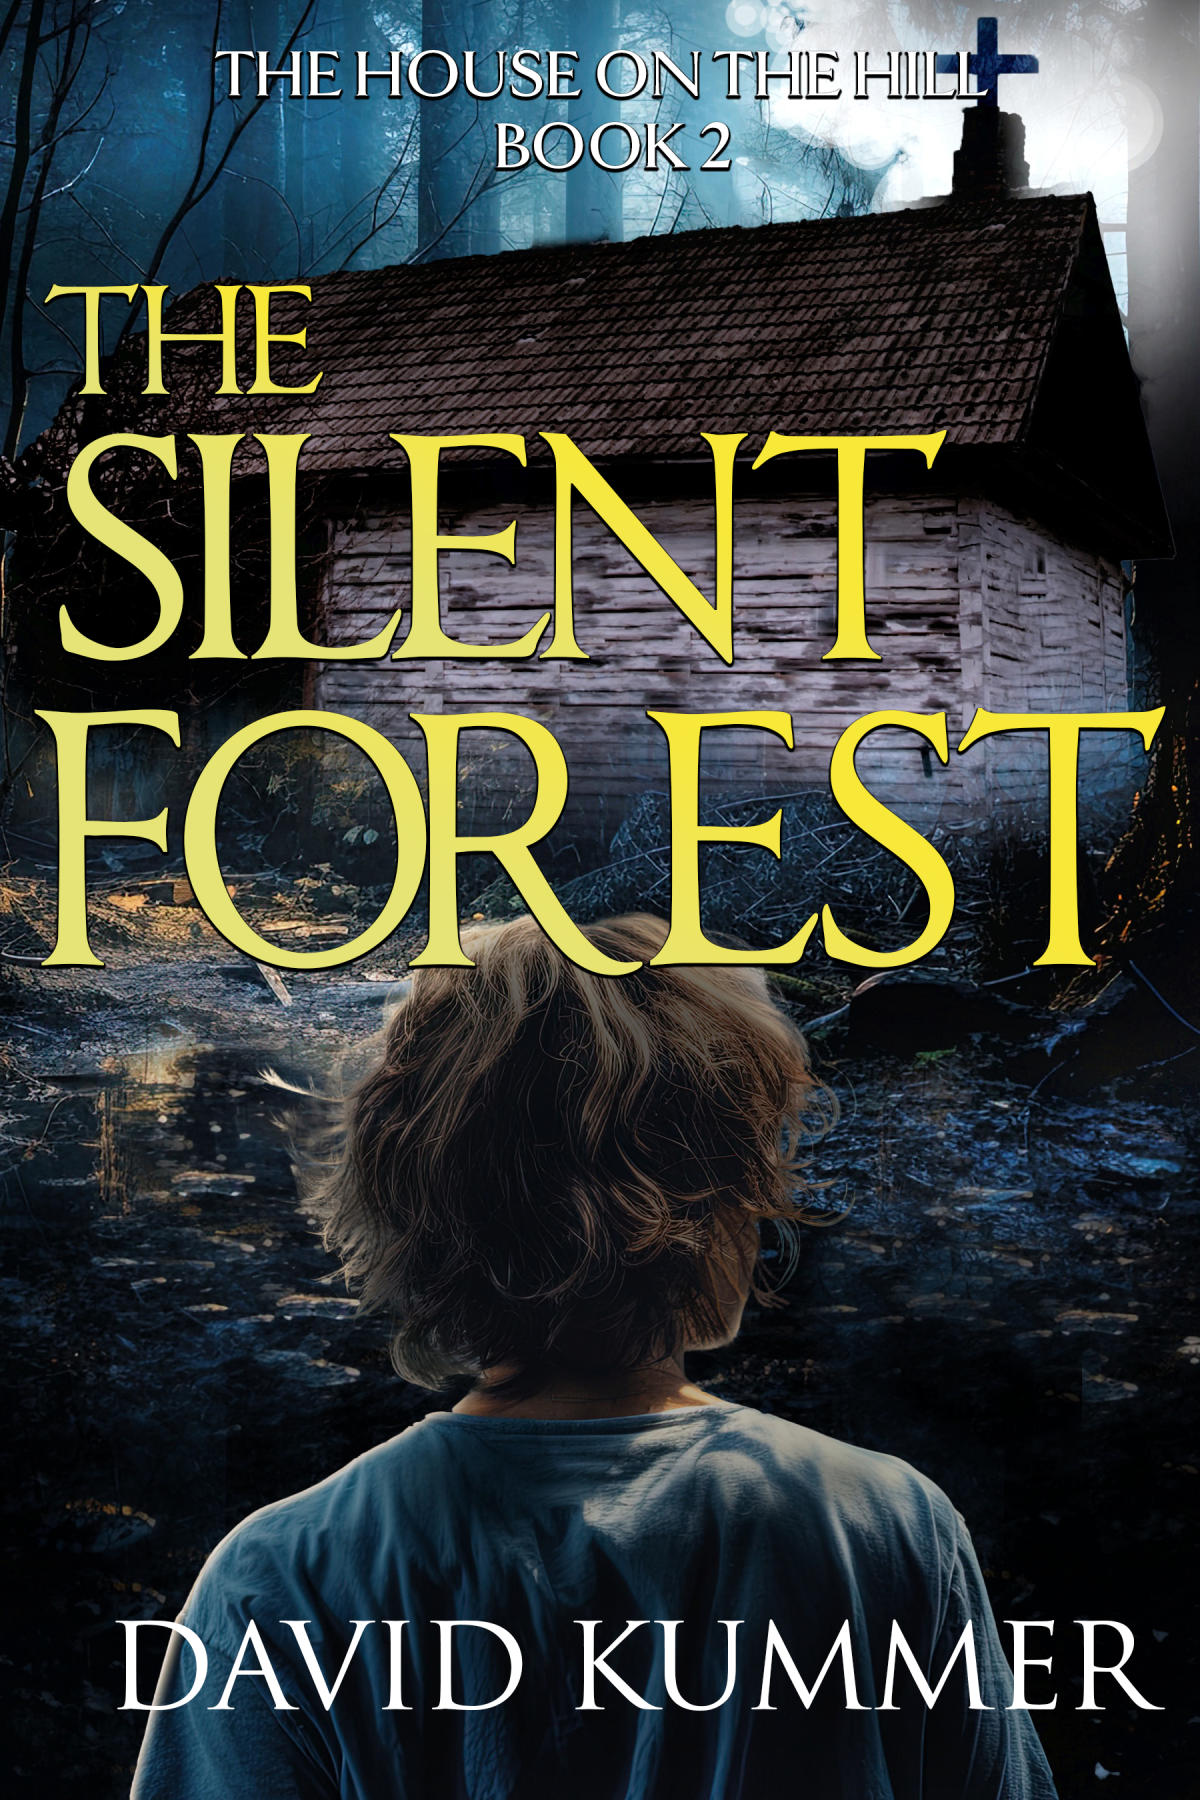 David Kummer’s “Silent Forest Book” immediately becomes the bestseller of the latest horror series